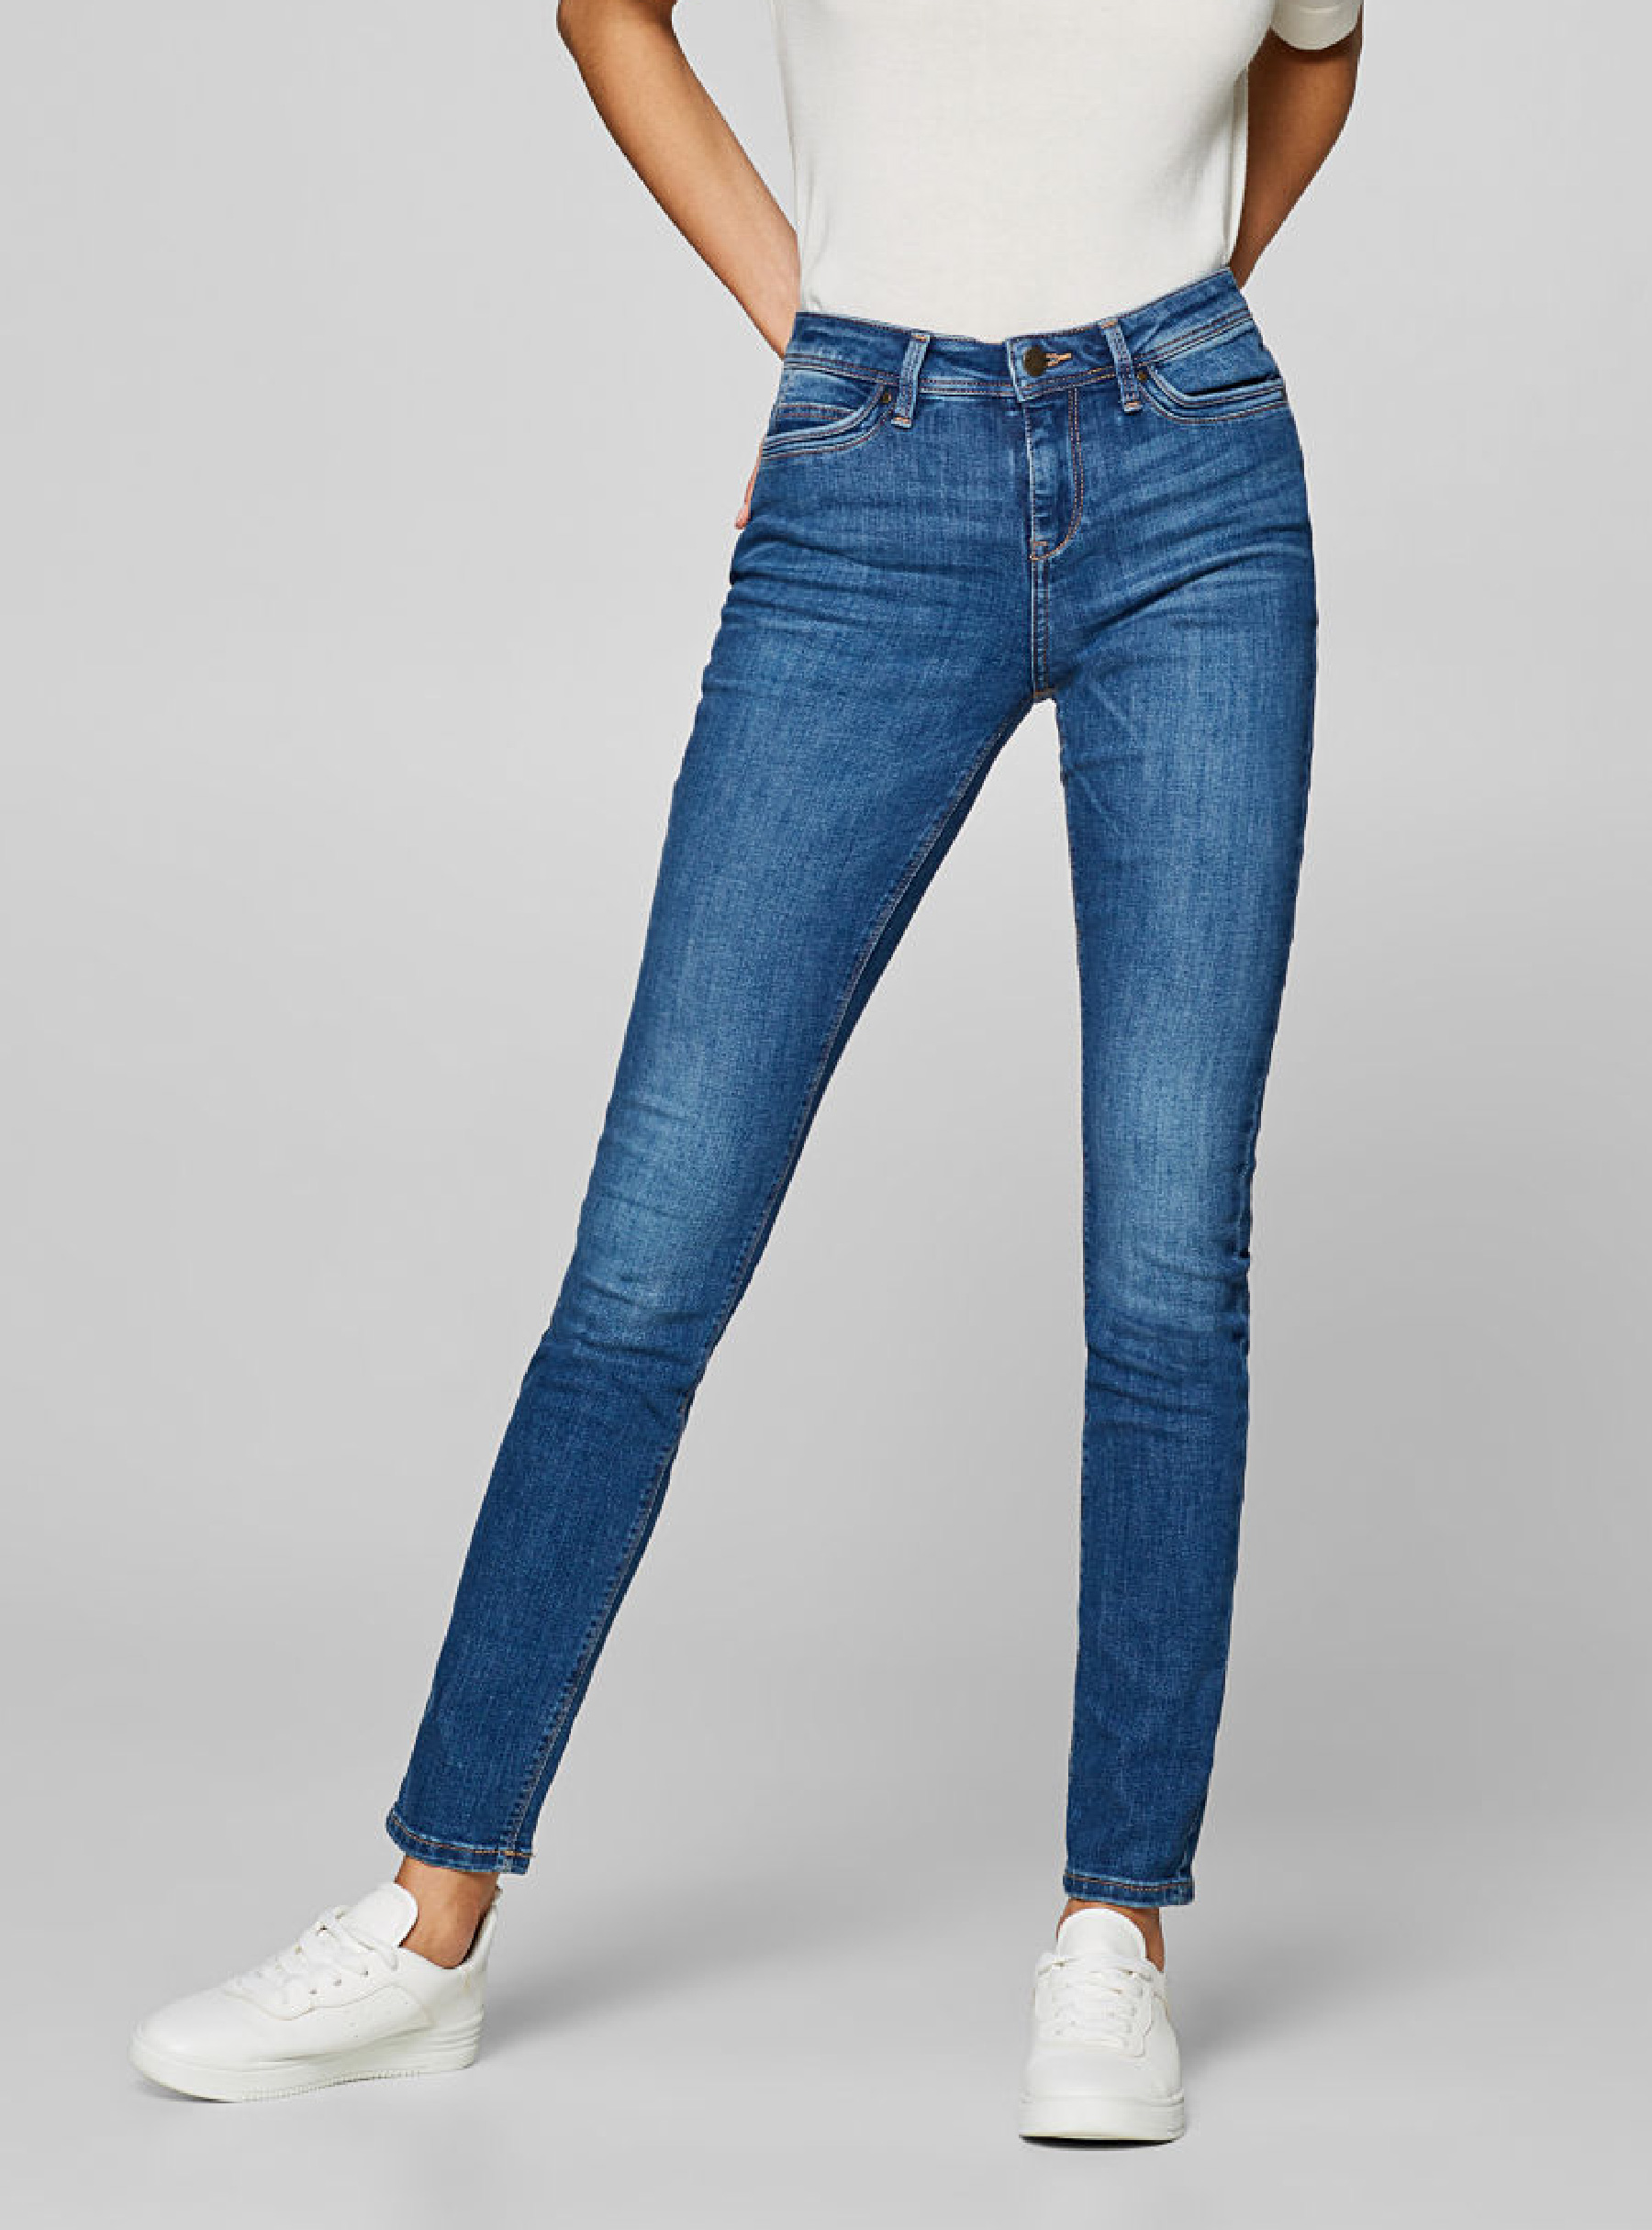  Cena Esprit jeans hlač: 59,99 €